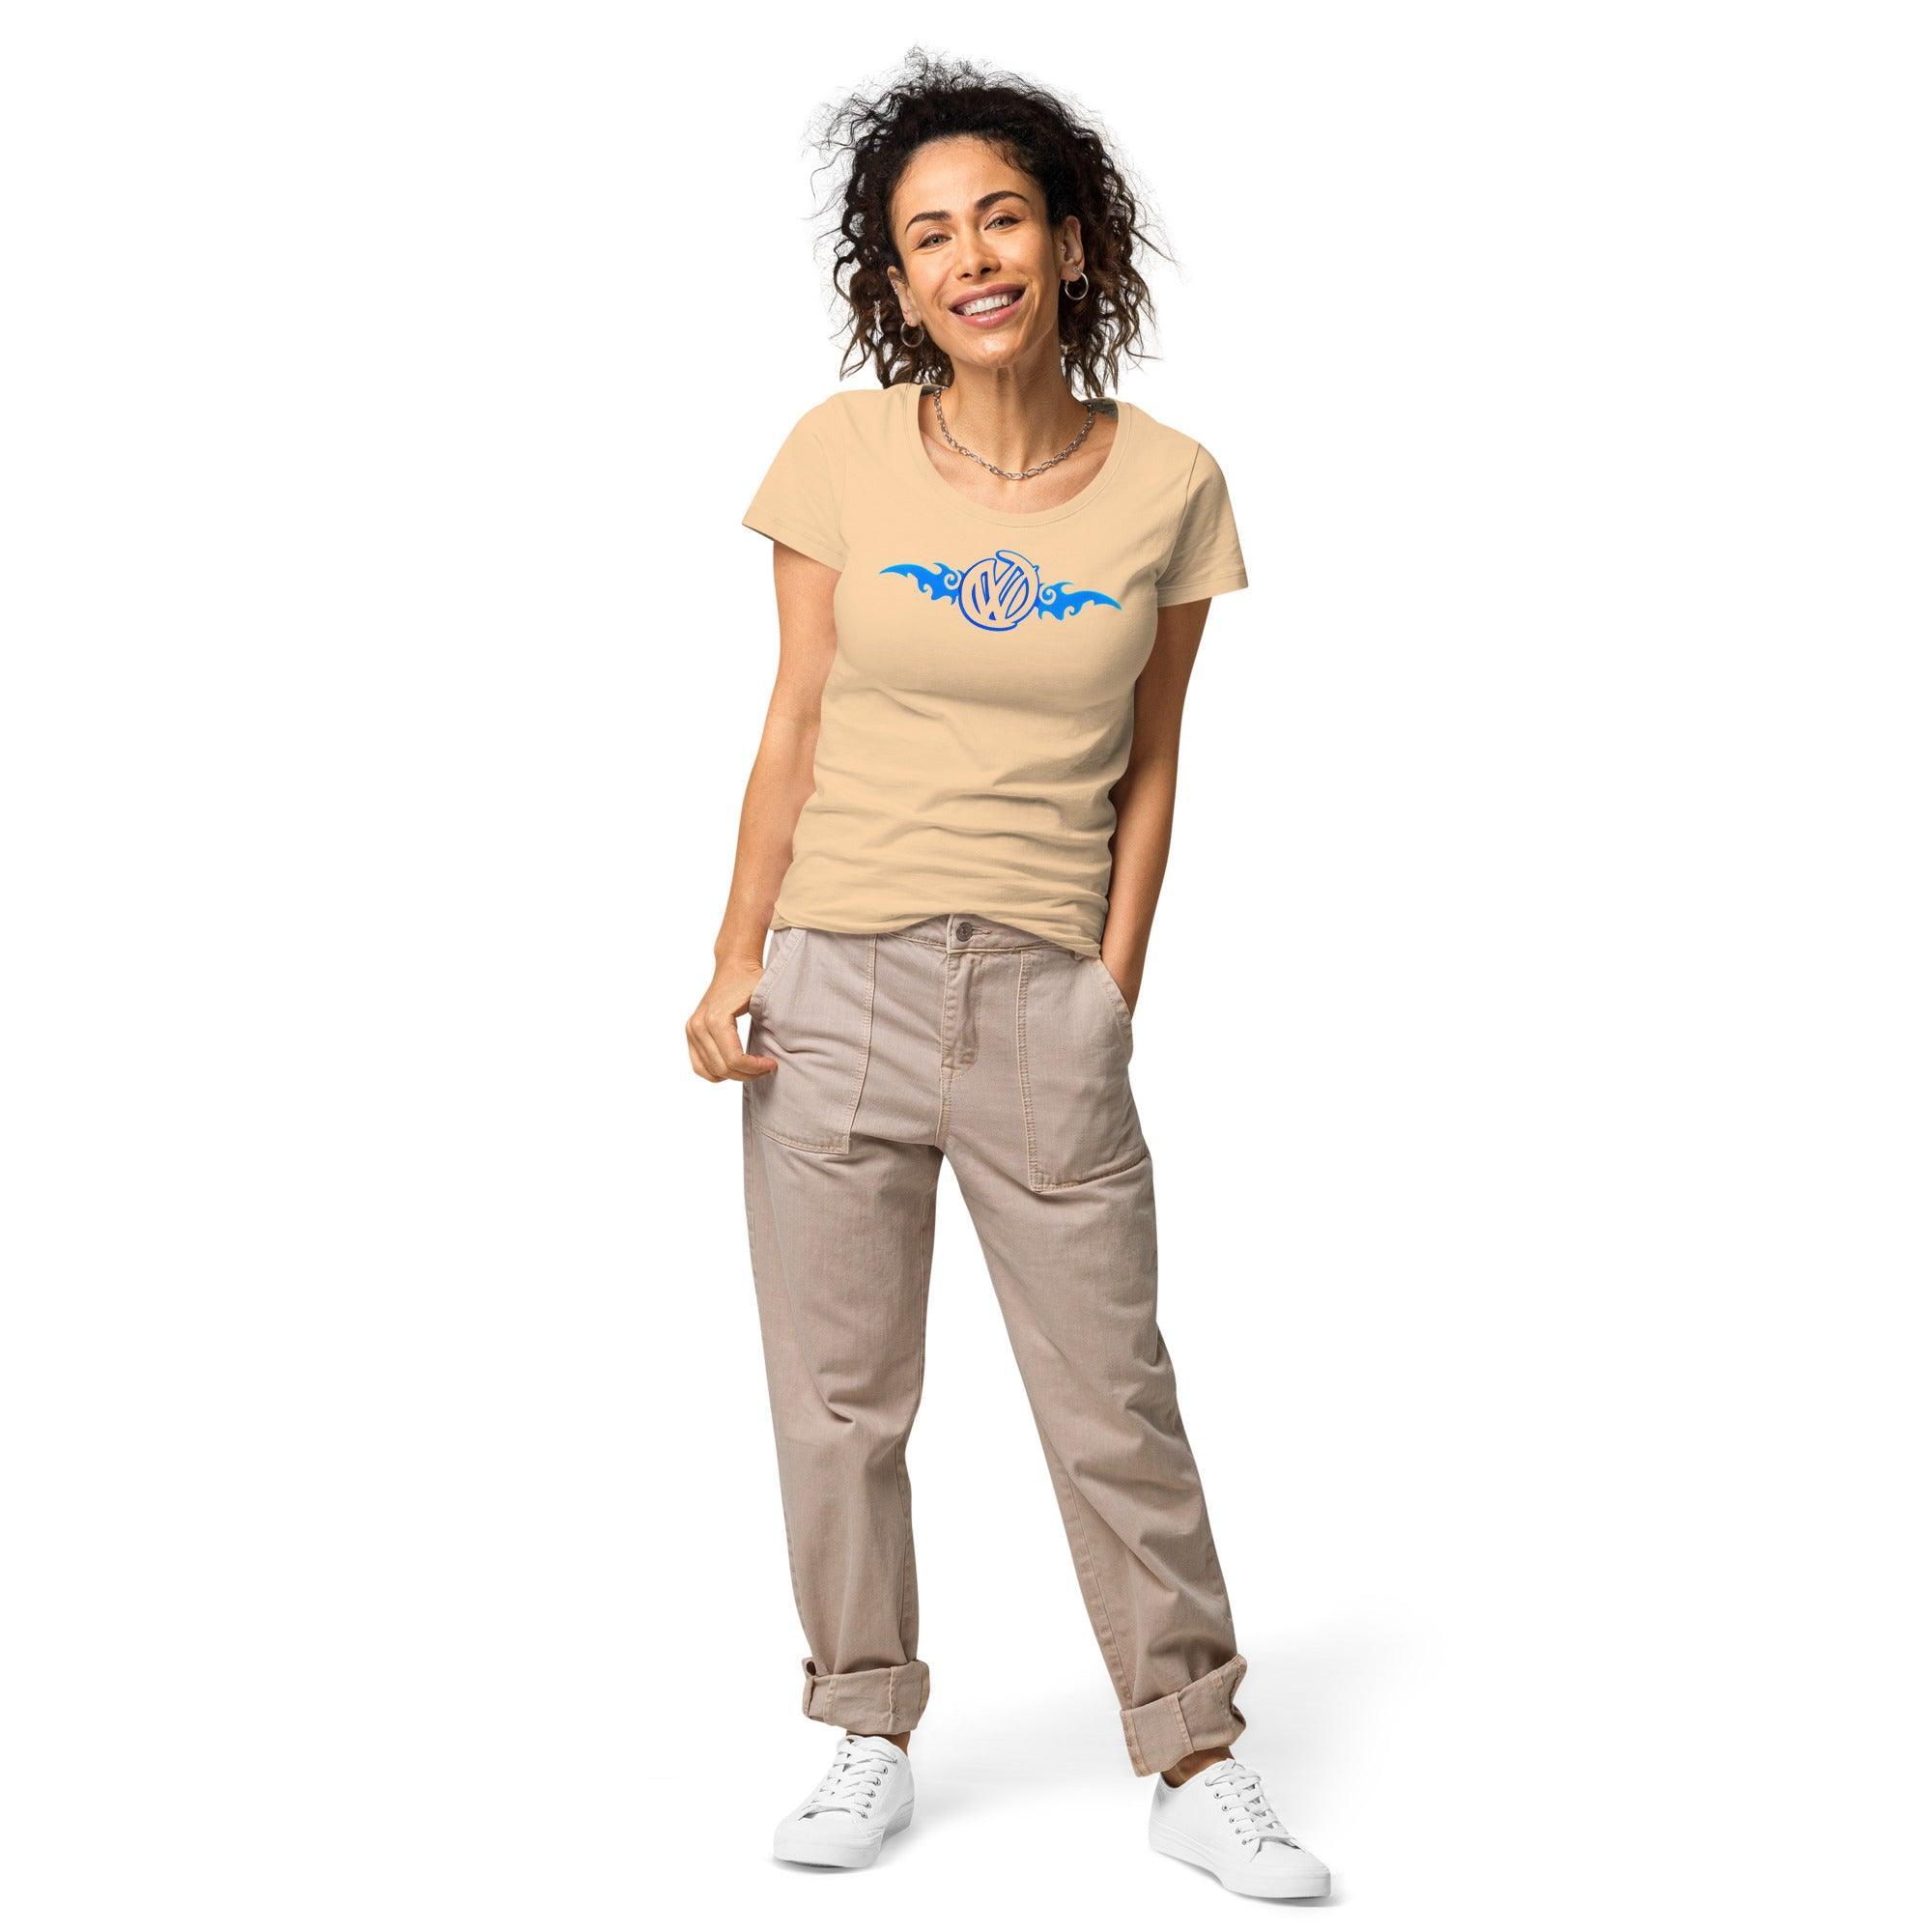 Camiseta orgánica básica para mujer VW AT - AutoRR 9495867_14501